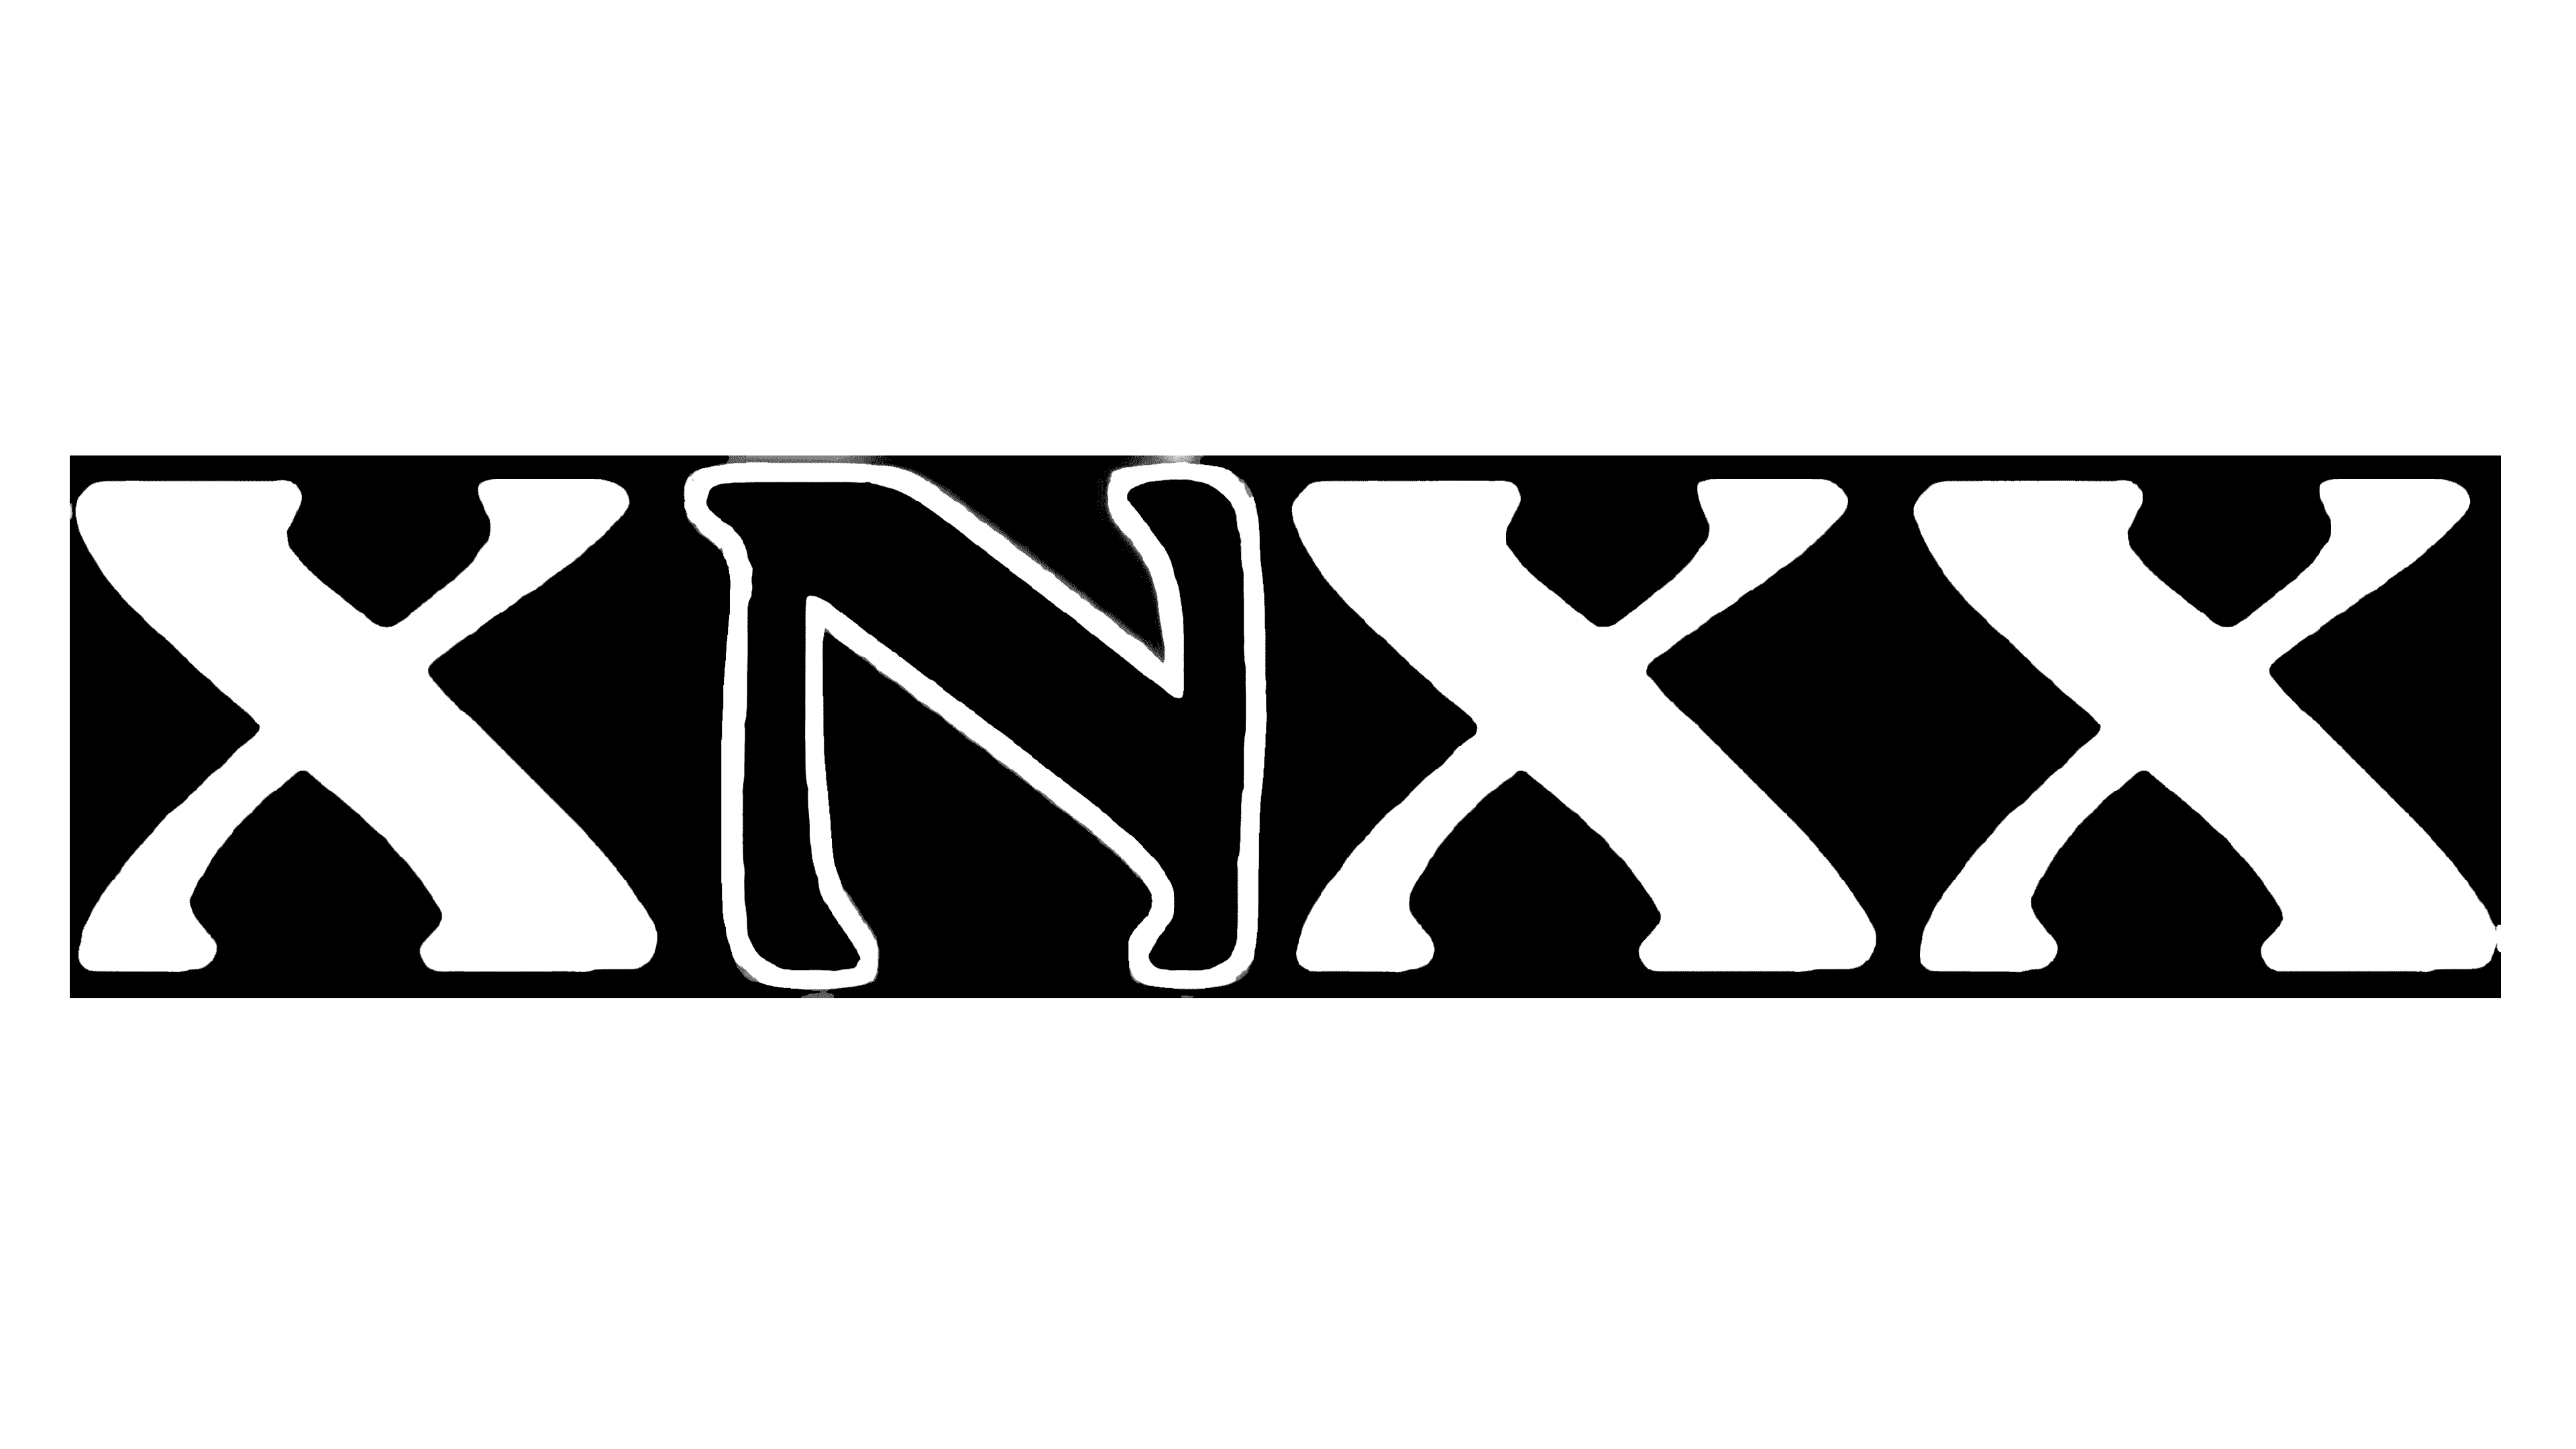 Wwwxnxx Com2018 - XNXX Logo and symbol, meaning, history, PNG, brand